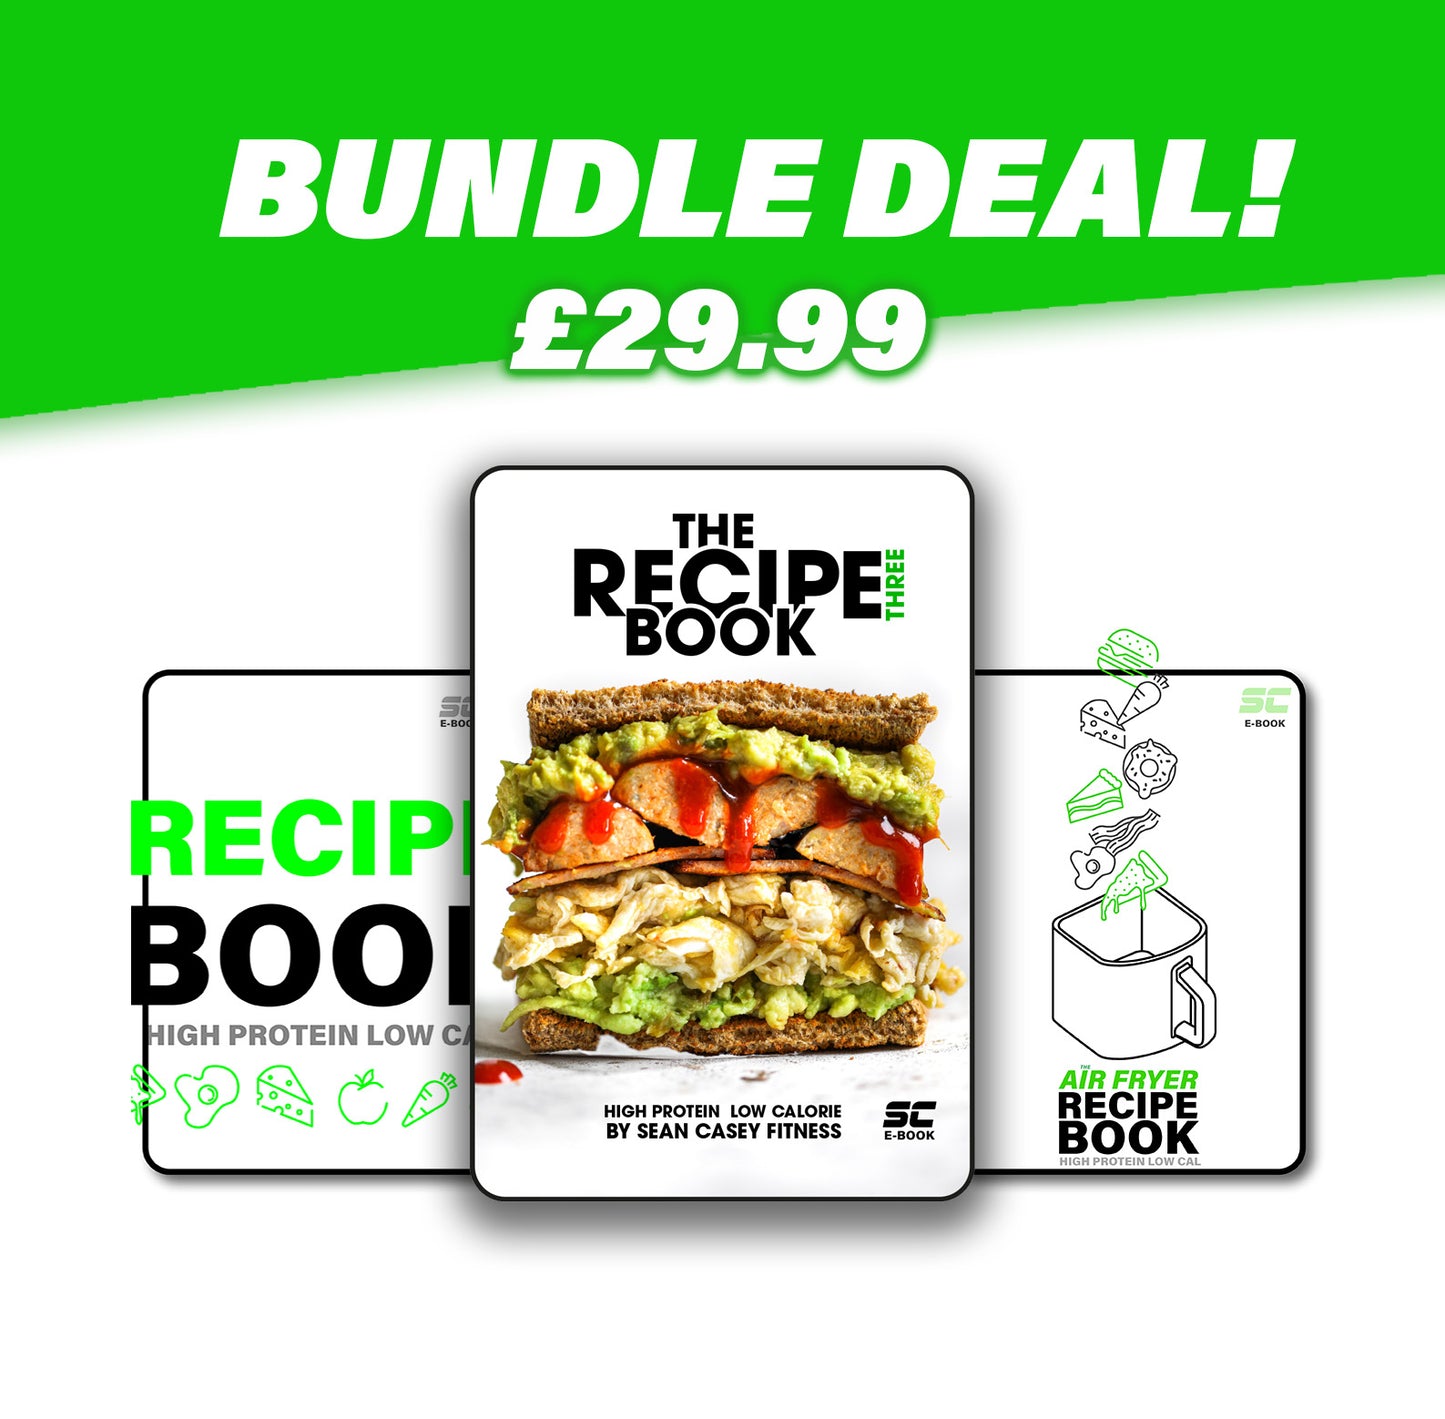 *NEW* Recipe E-Book Bundle Deal!